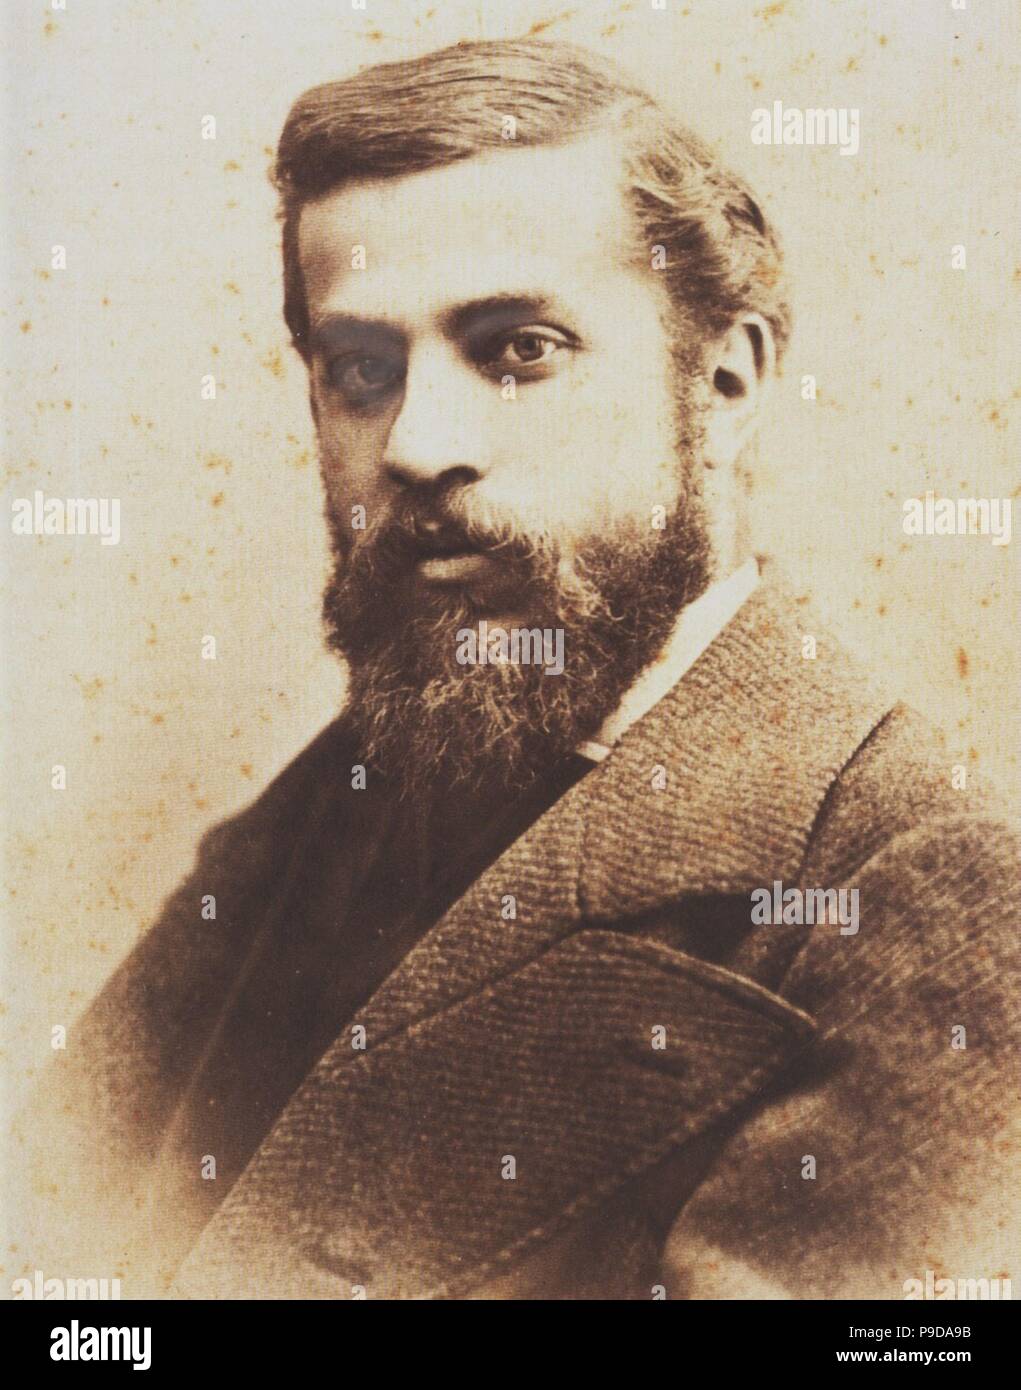 Portrait of Antoni Gaudí. Museum: PRIVATE COLLECTION. Stock Photo